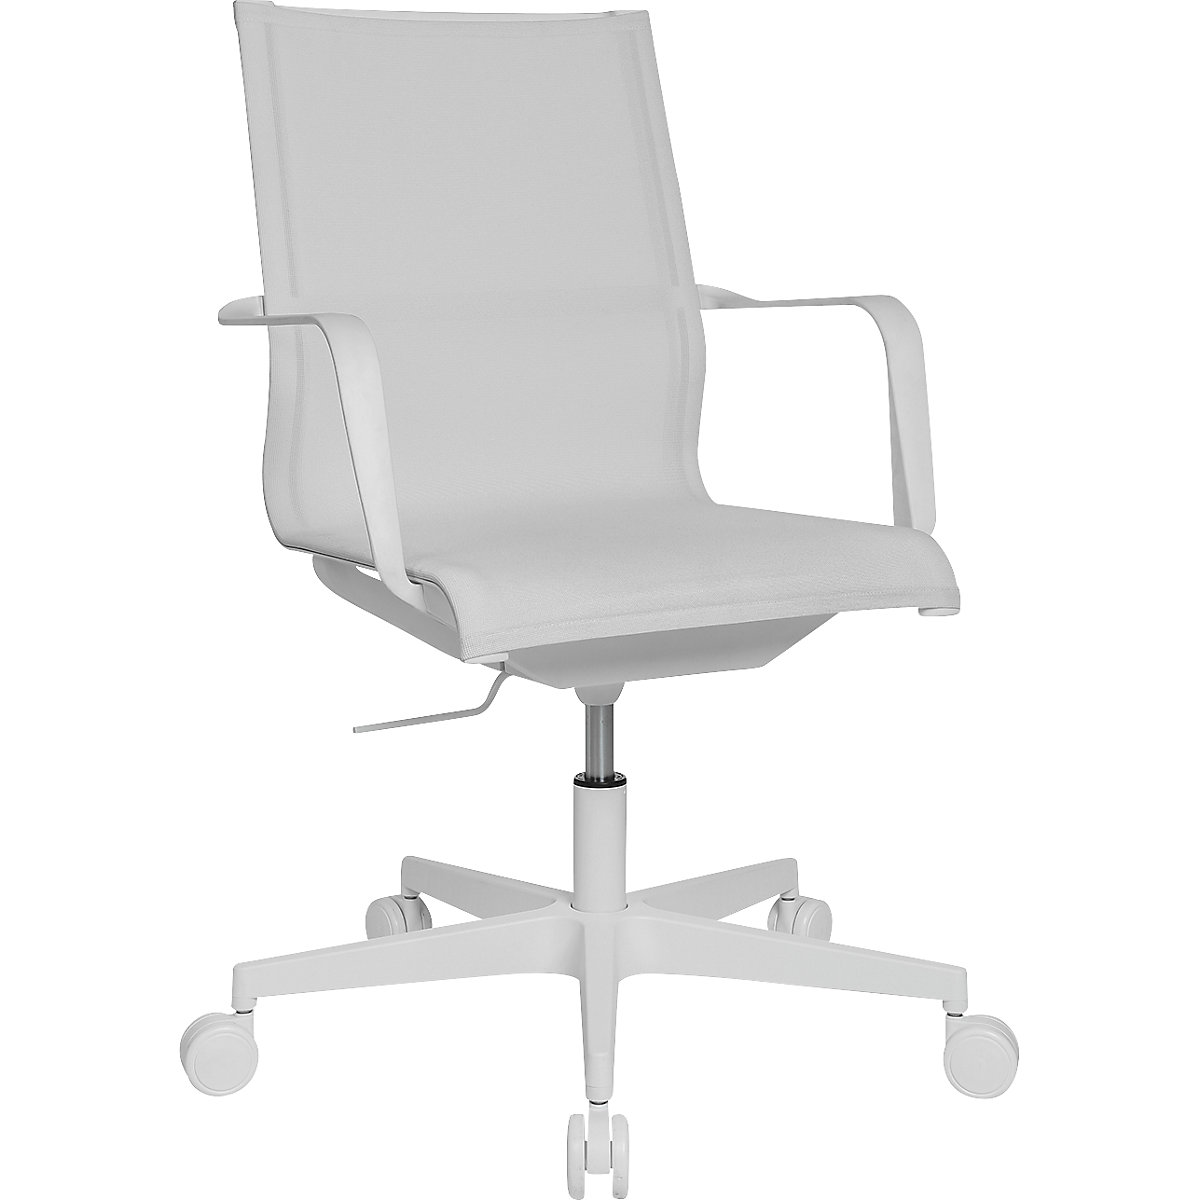 SITNESS LIFE 40 office swivel chair - Topstar